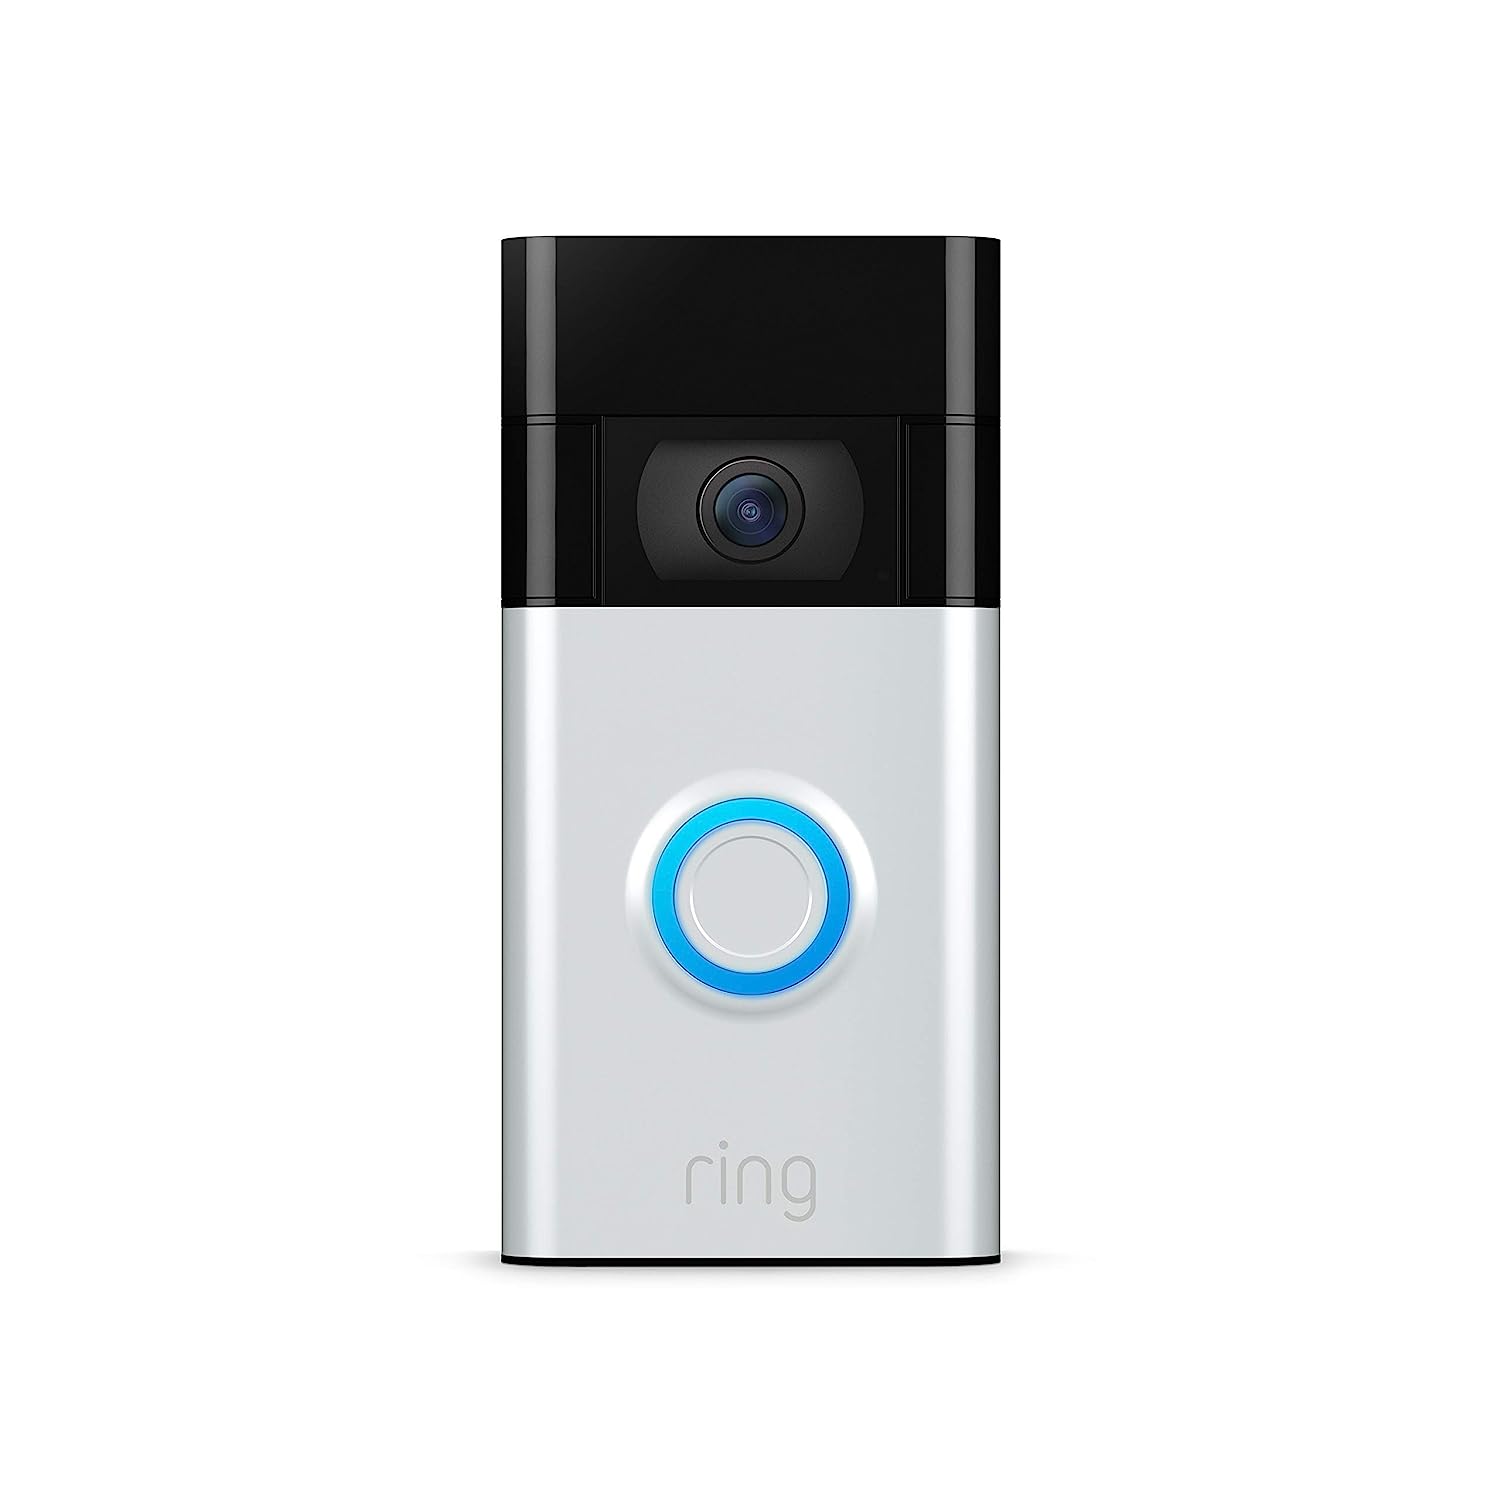 Ring Video Doorbell - 1080p HD video, improved motion detection, easy installation – Satin Nickel - $60